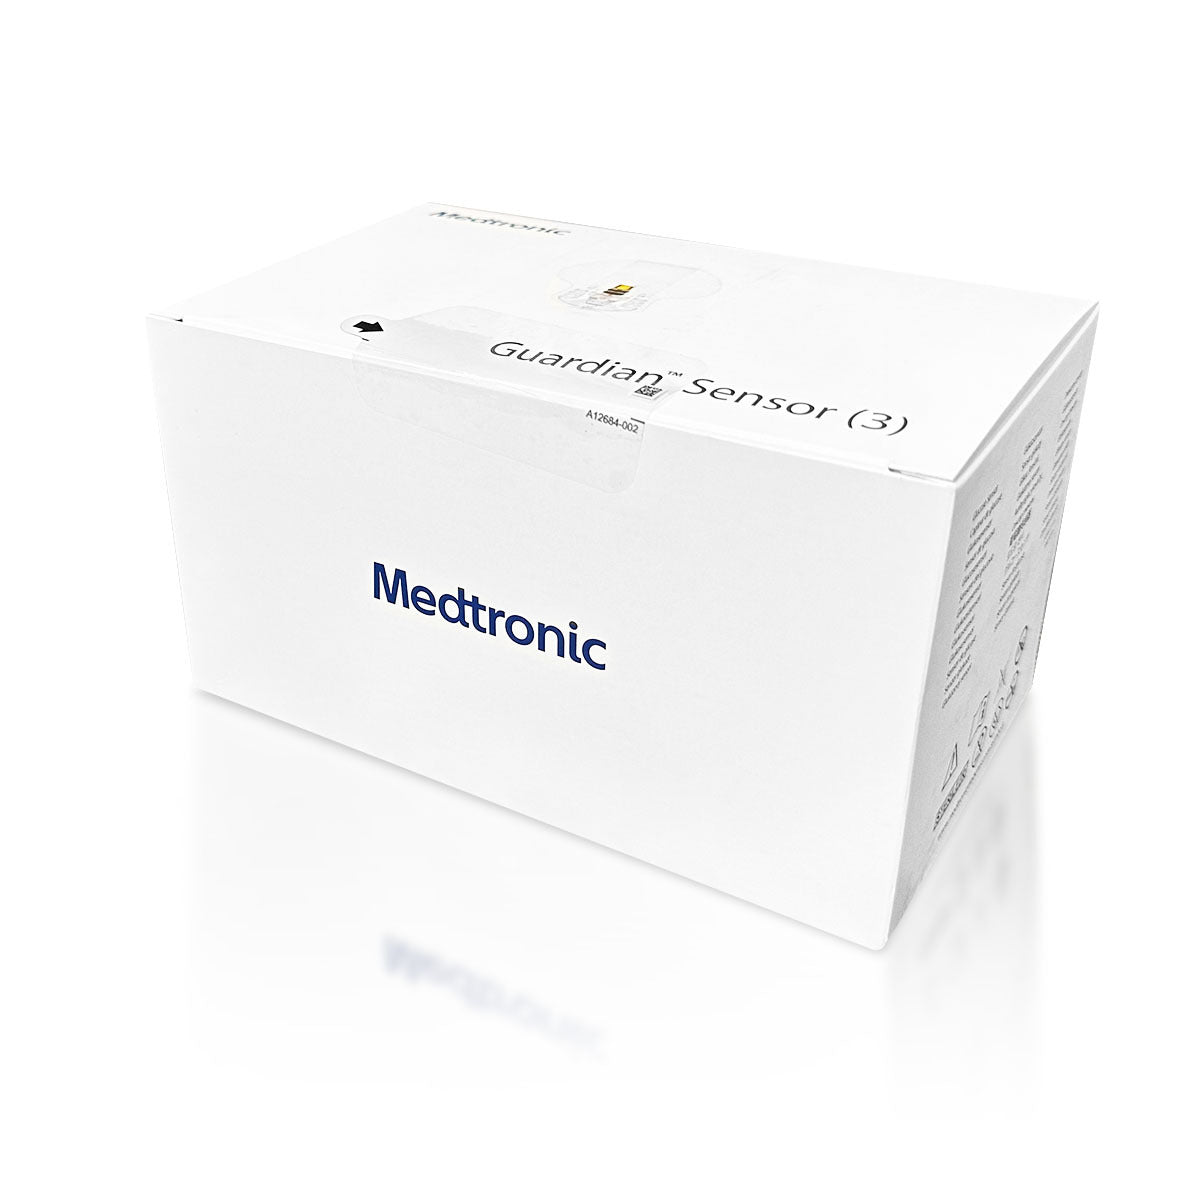 Medtronic Guardian Sensor (3) MMT-7020A